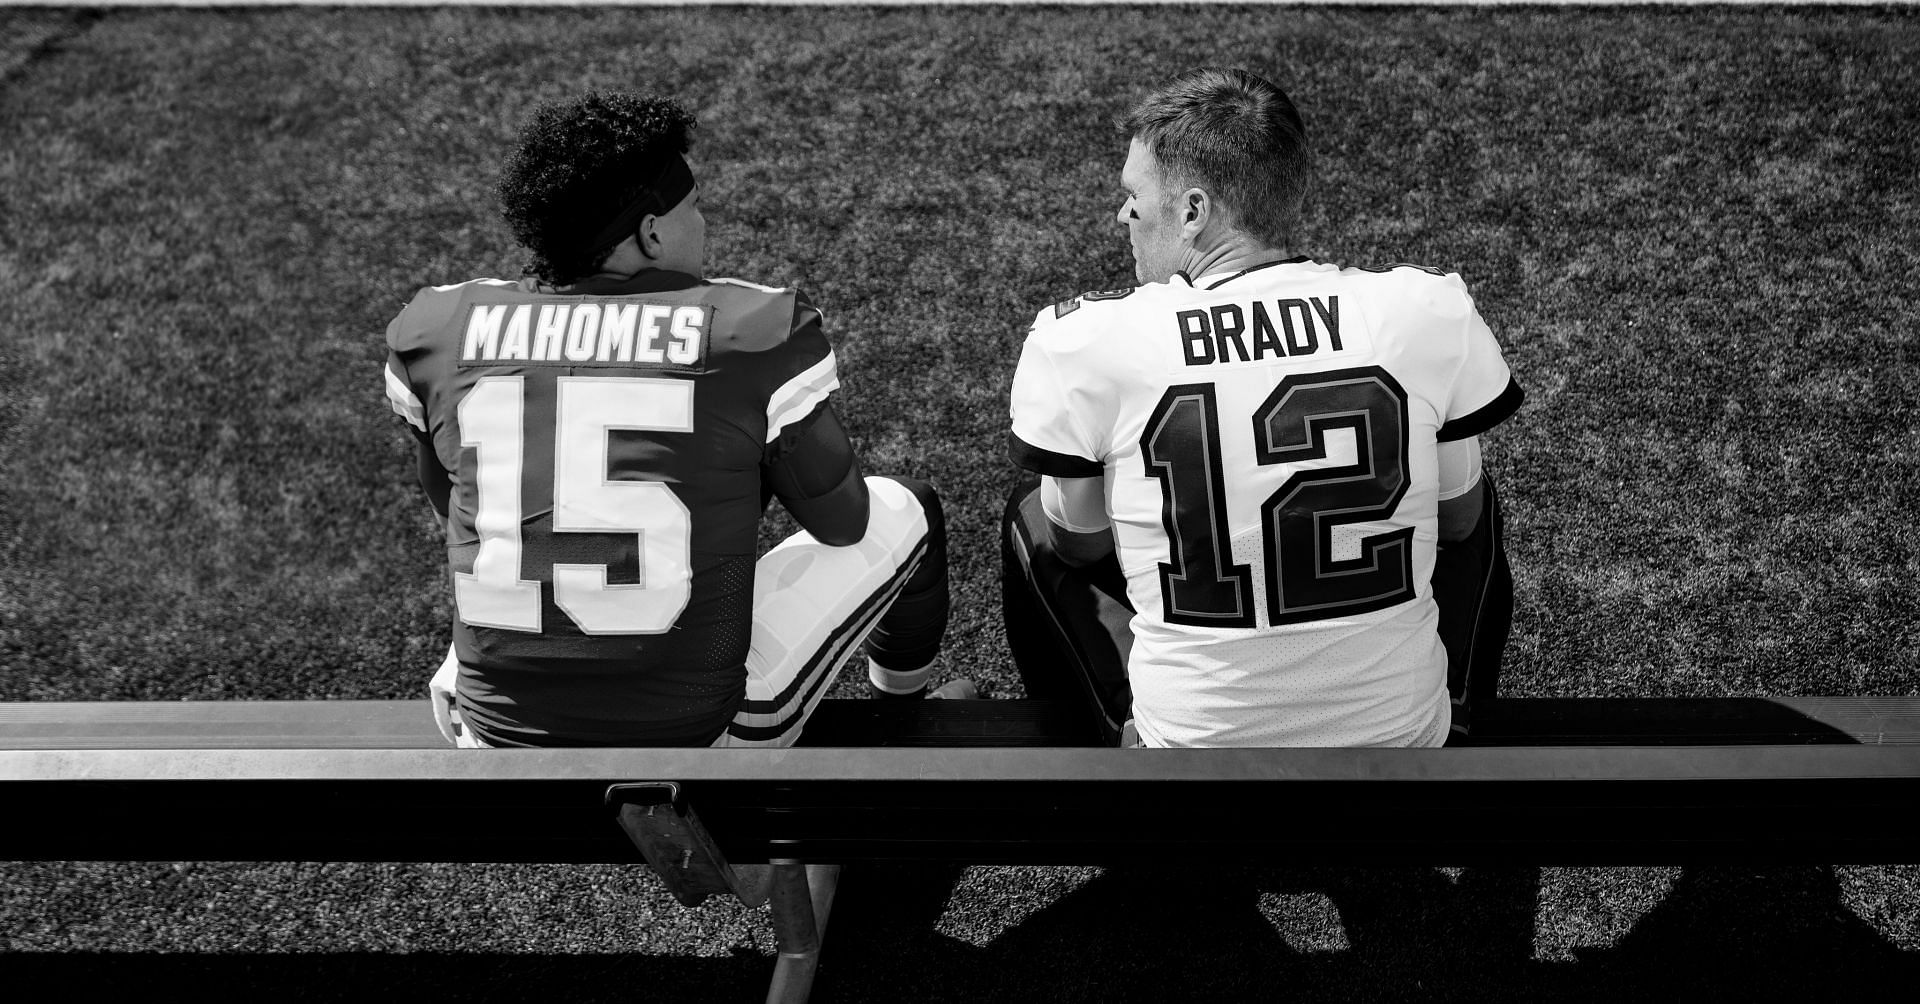 Tom Brady and Patrick Mahomes - (image credit: EA Sports)